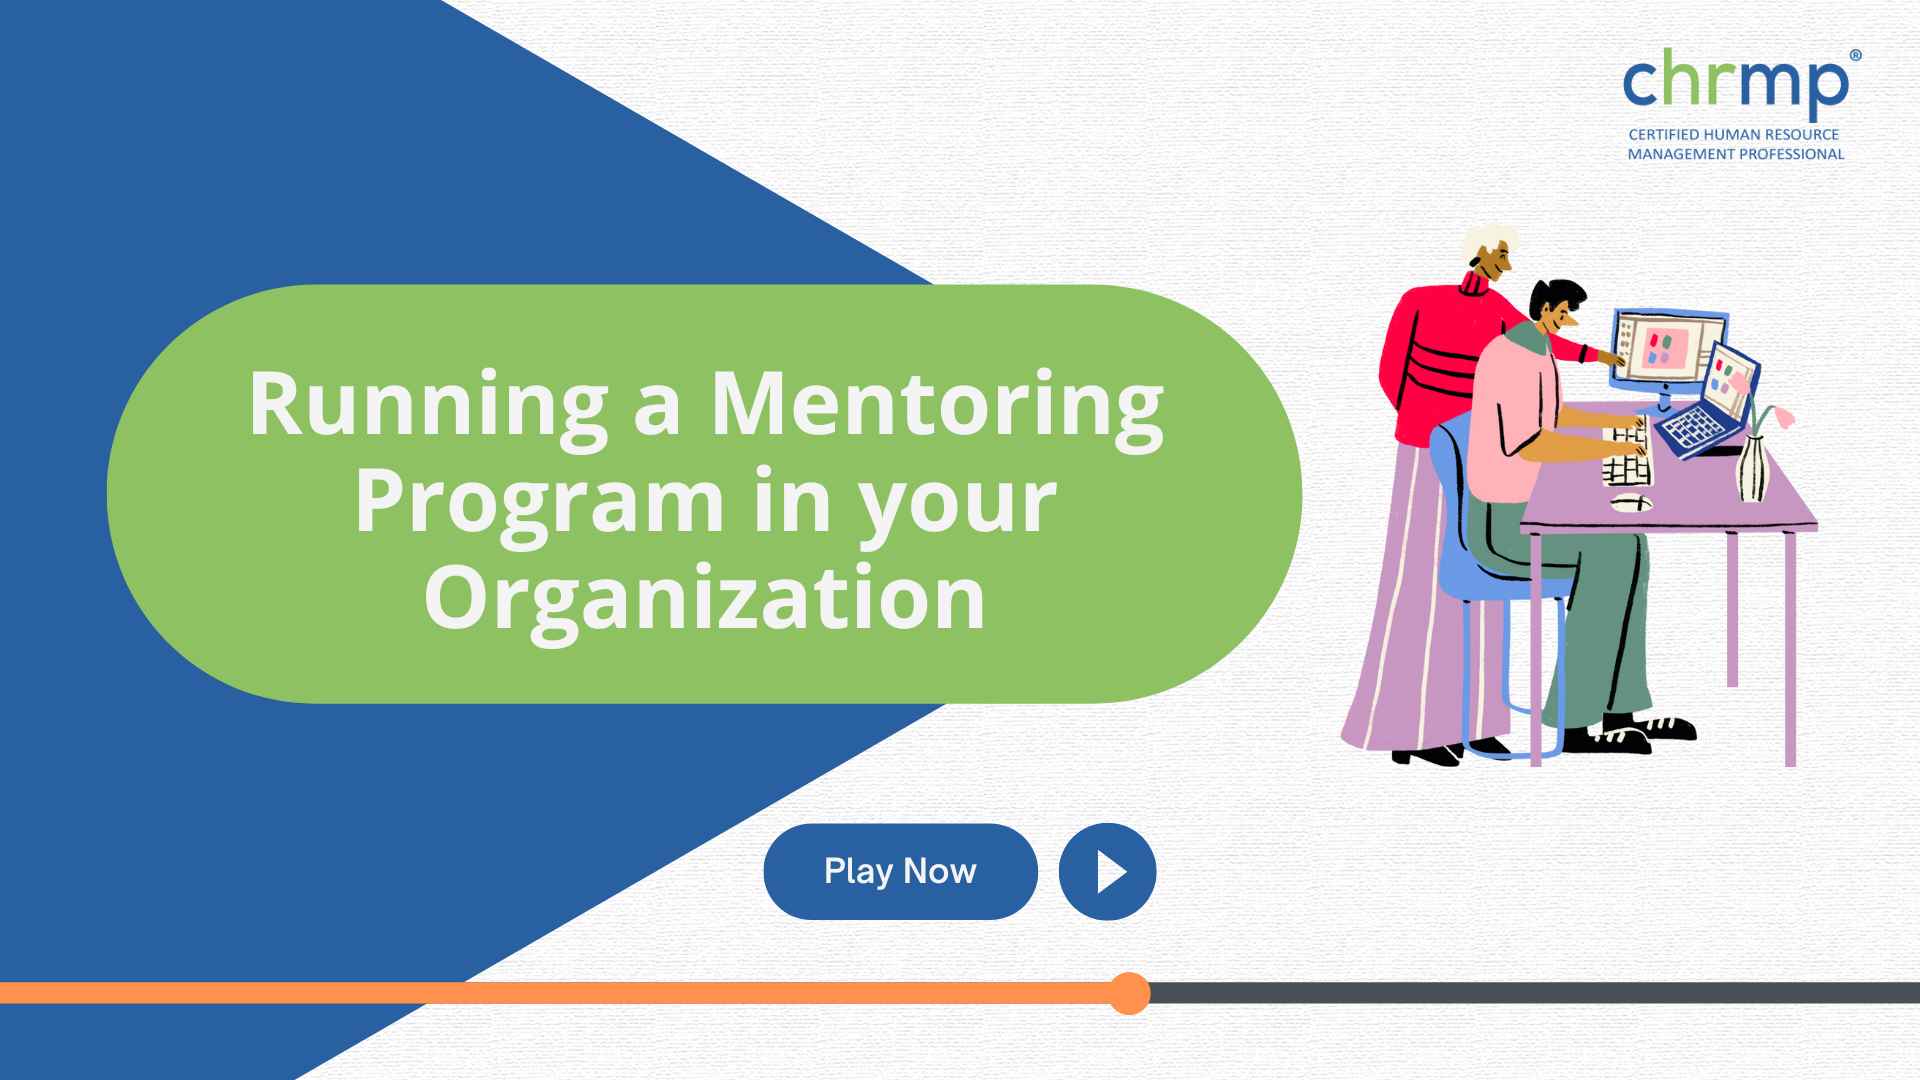 Running a mentoring program in your organization